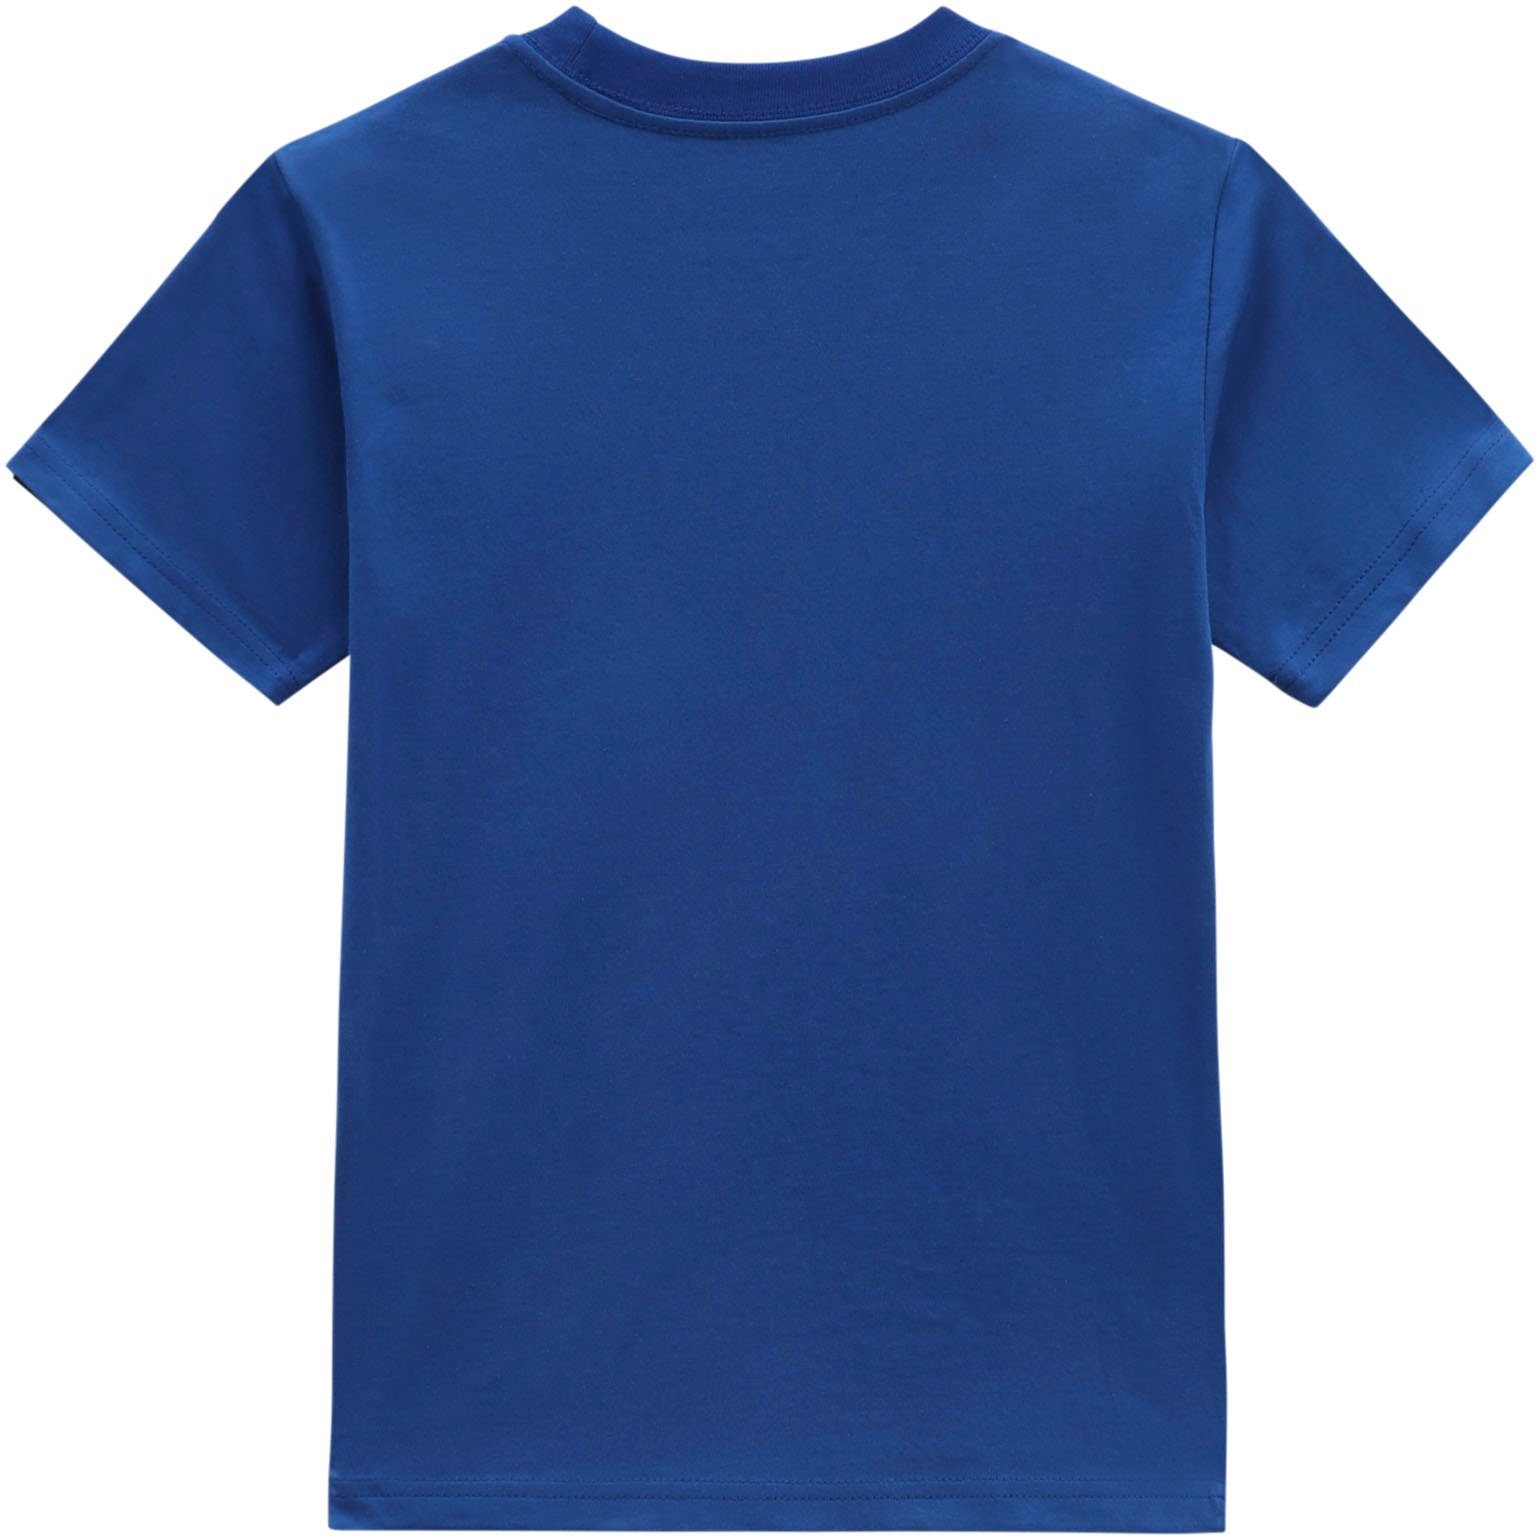 Vans T-Shirt BY VANS CLASSIC KIDS white blue